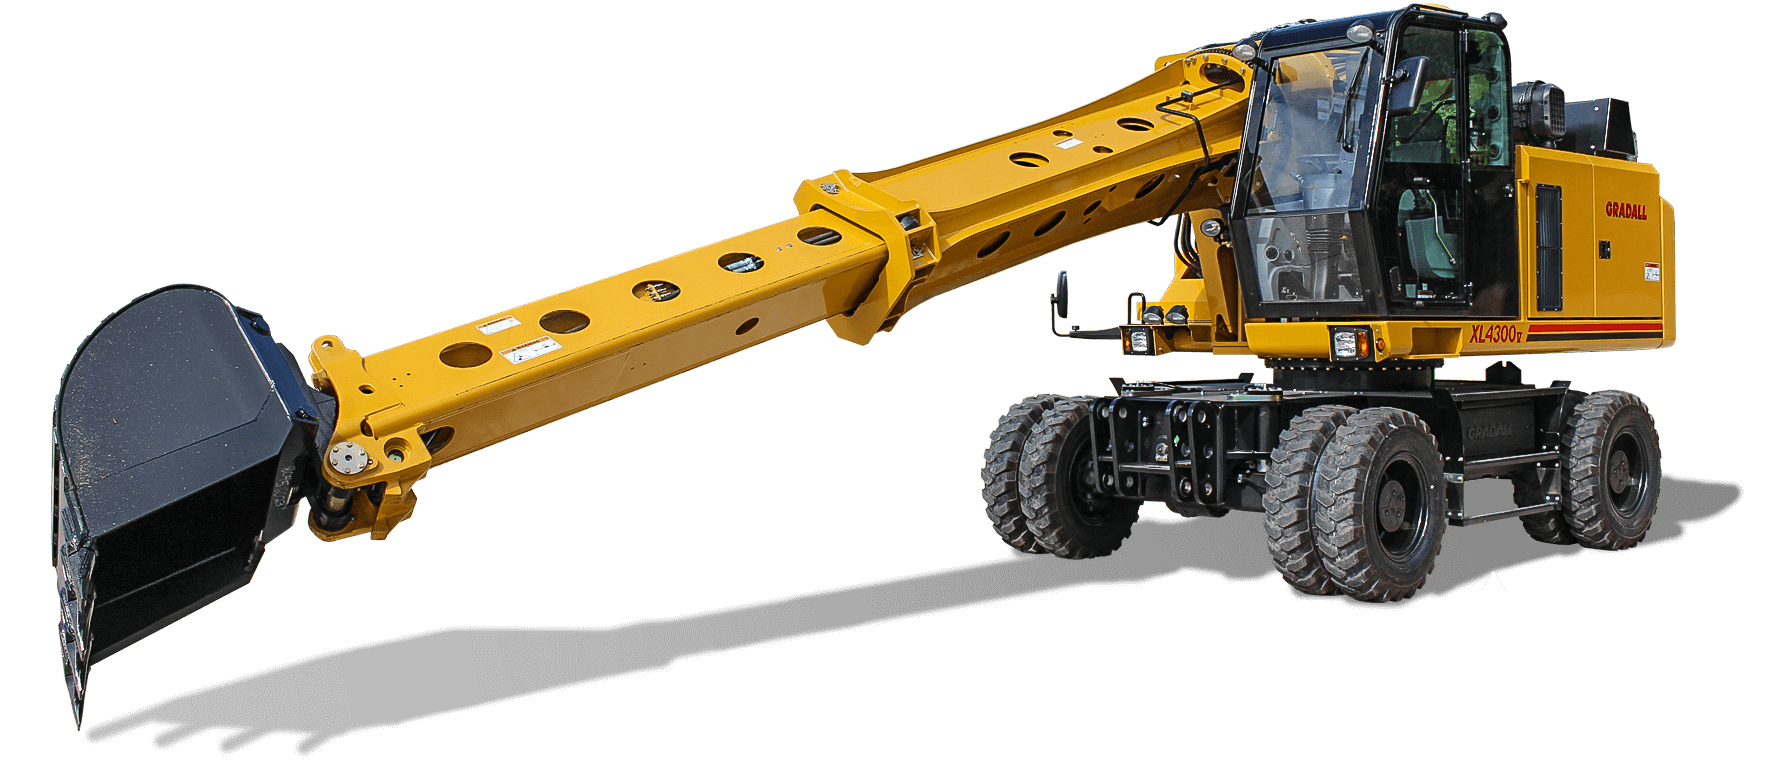 XL 4300 V - Rough Terrain Wheeled Excavators - Amaco